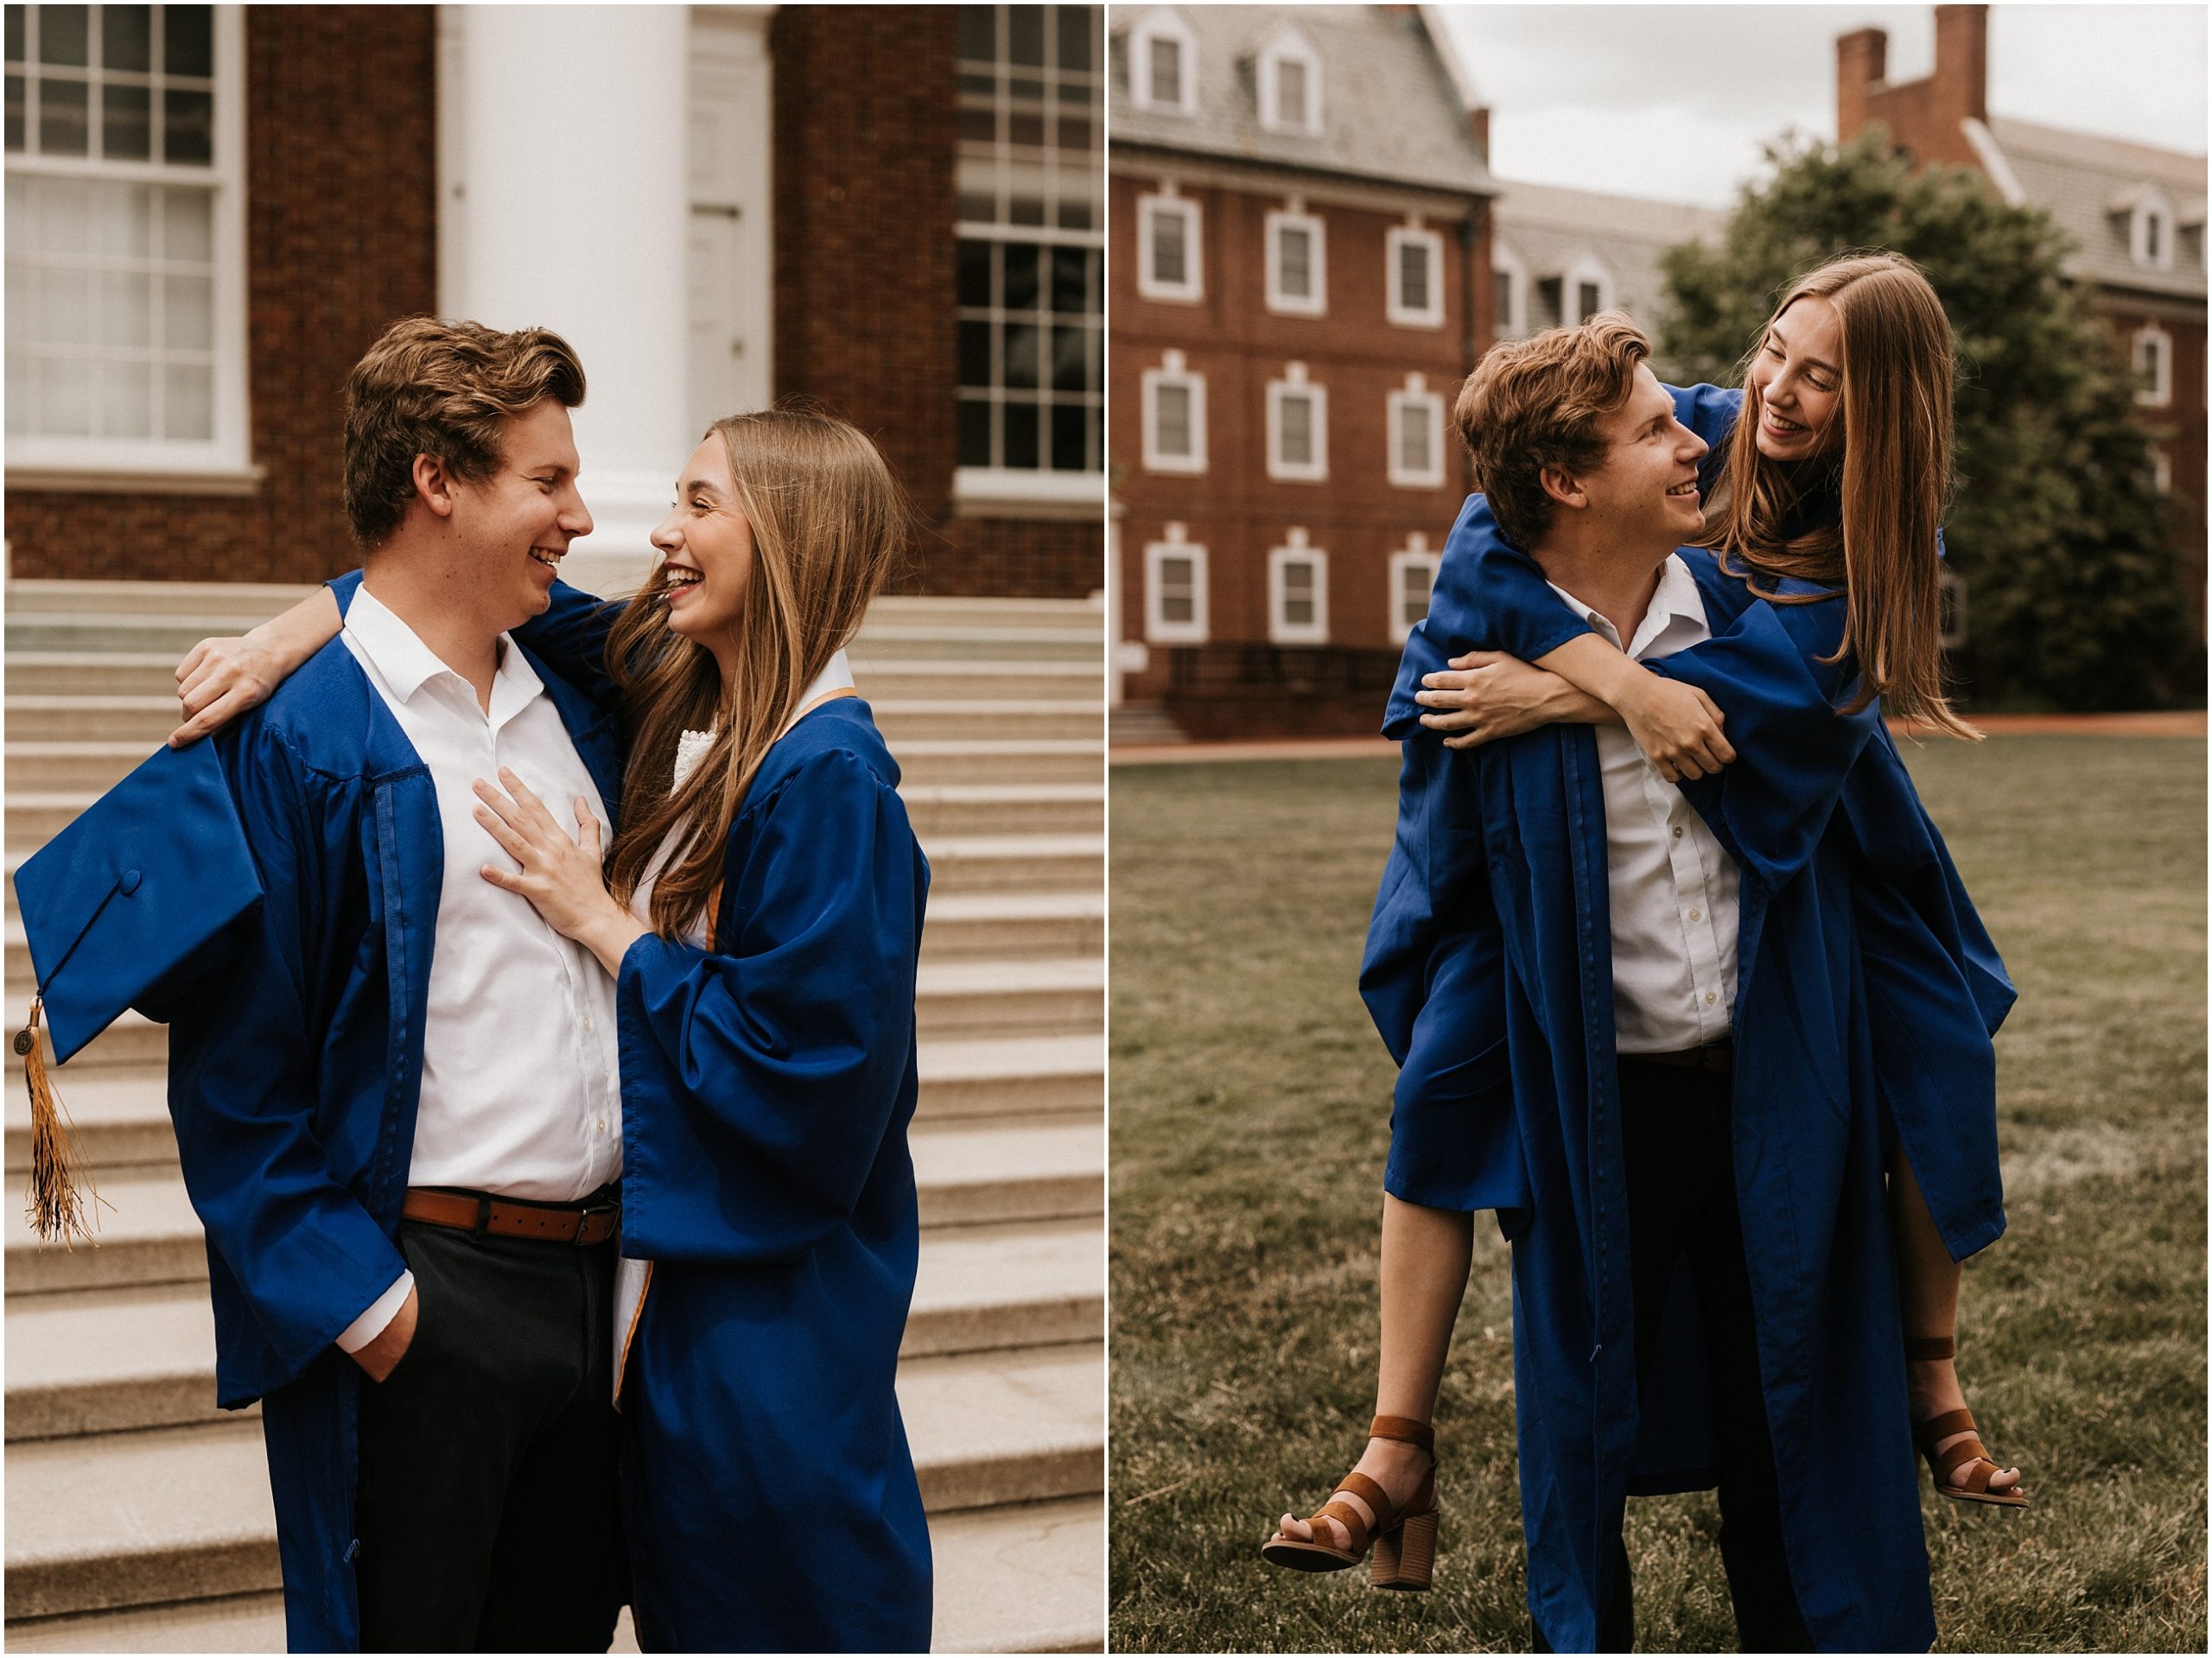 Tori Kelner Photography Graduation Portraits